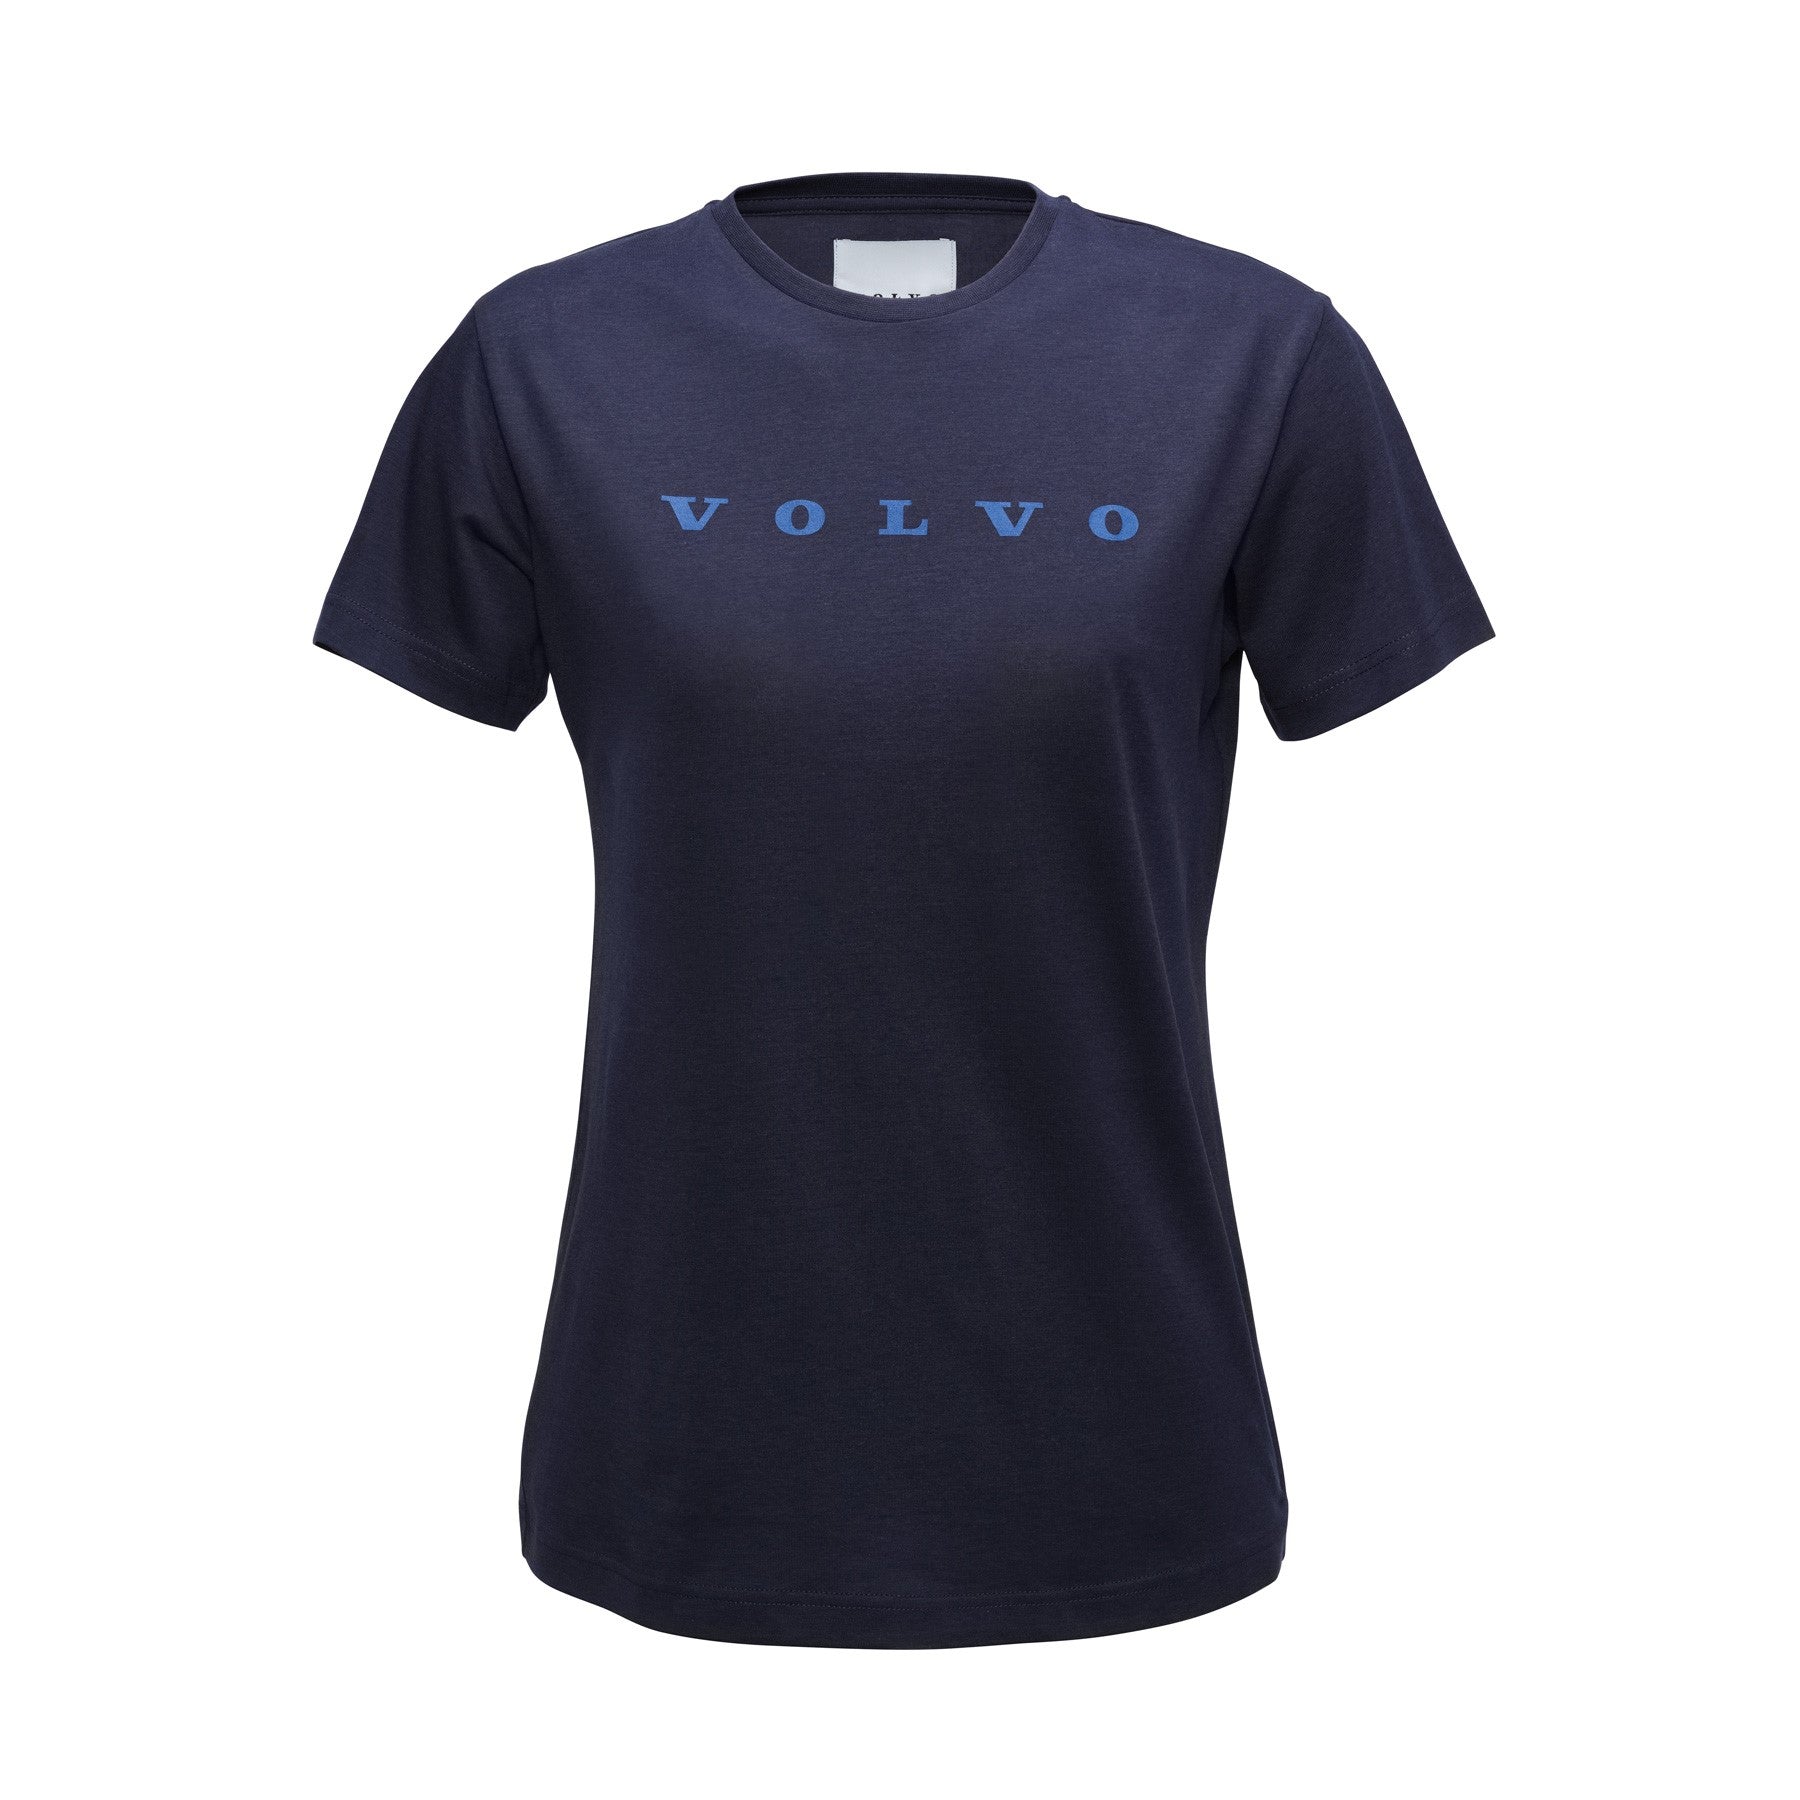 LNDR, Midnight blue Women's T-shirt